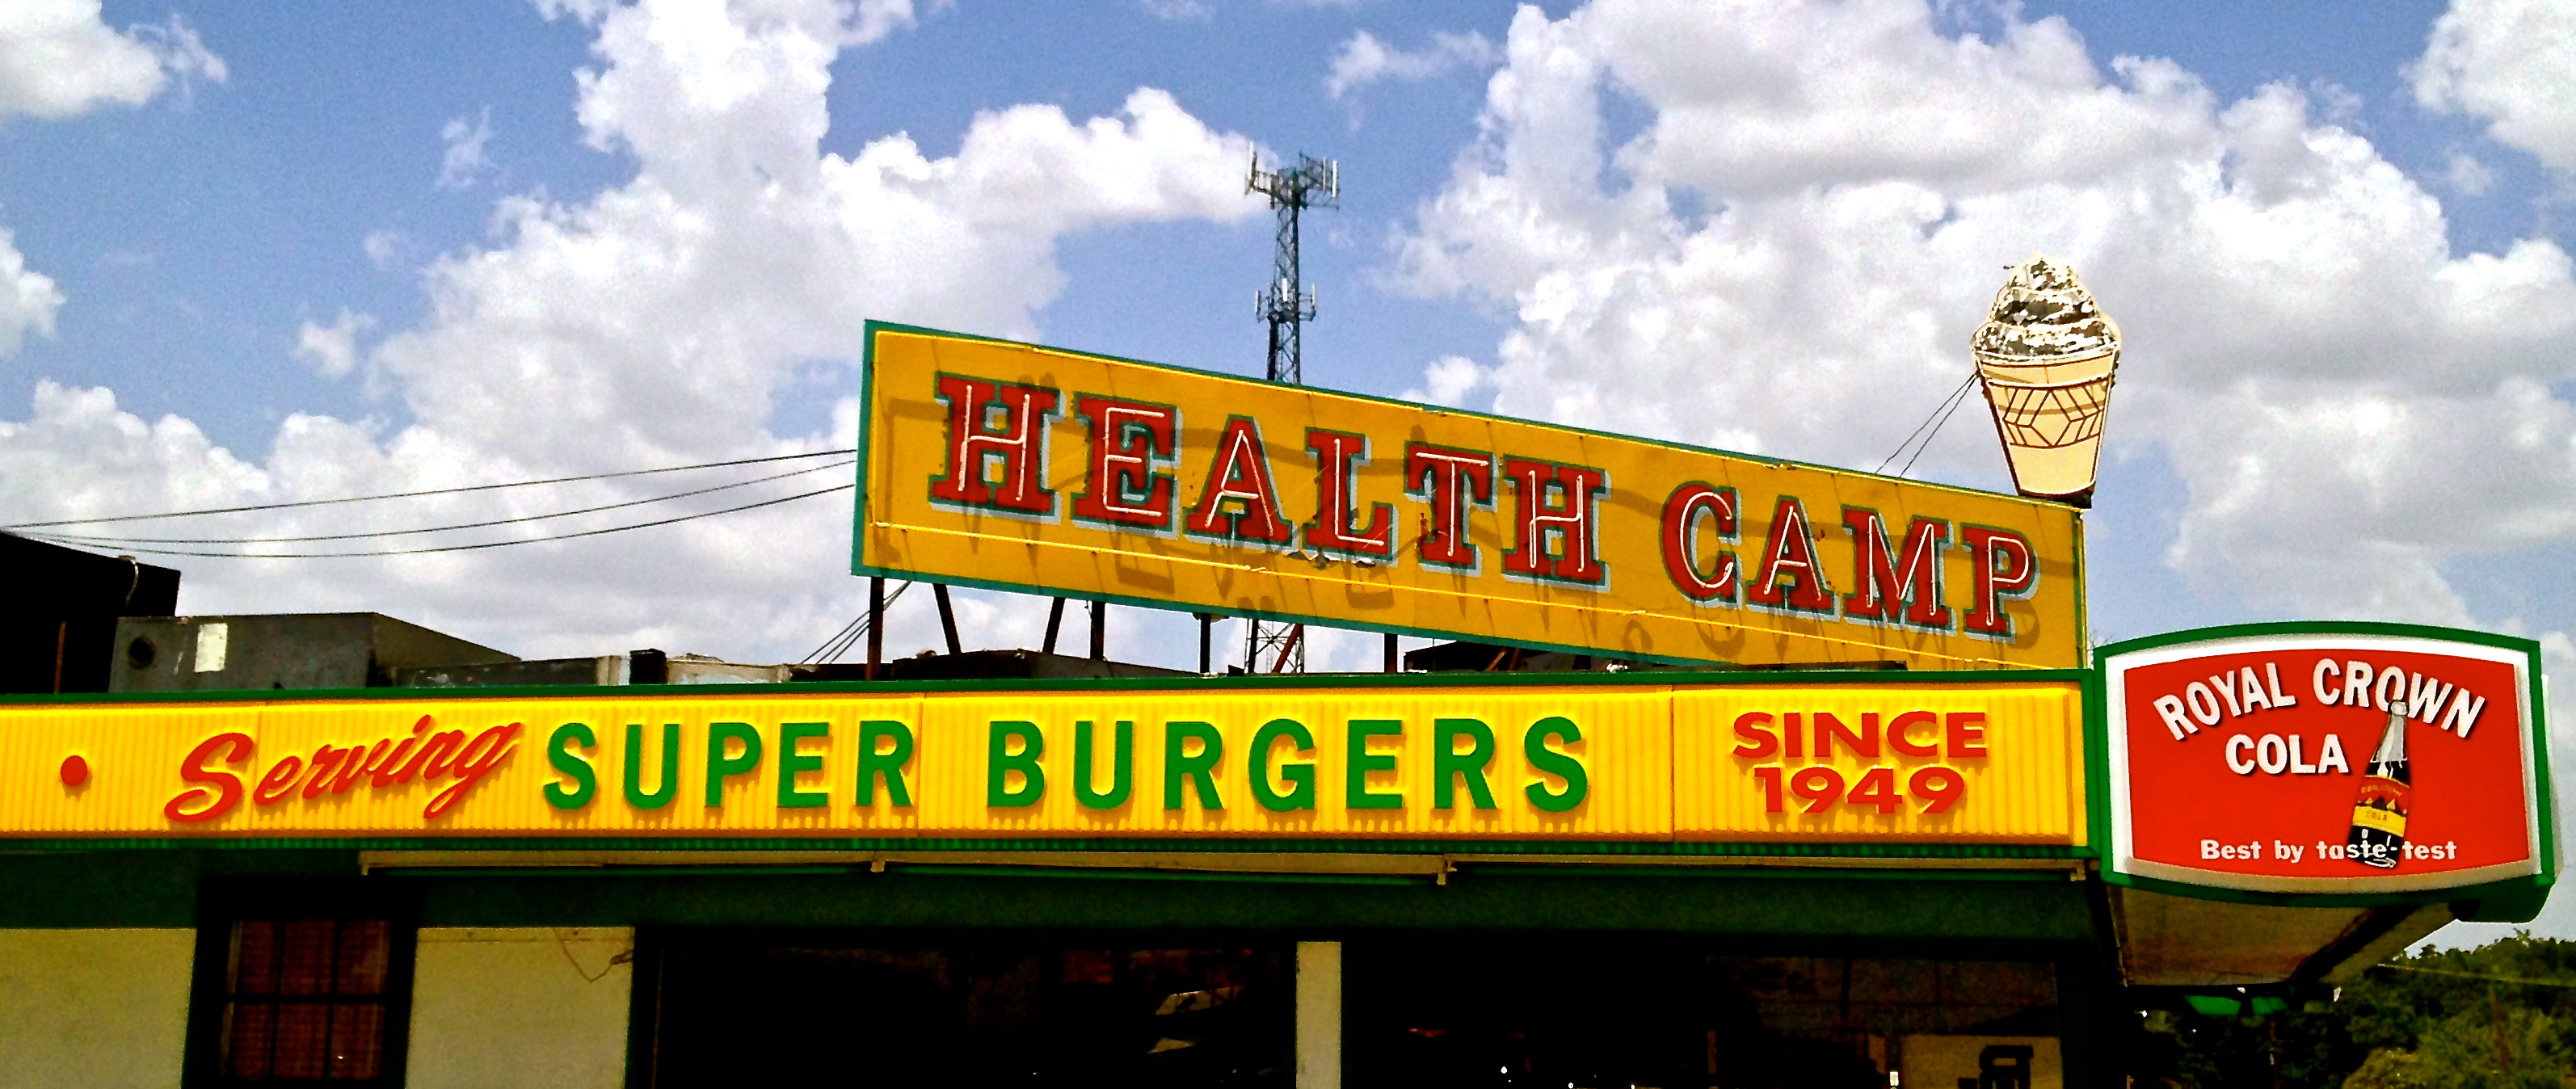 Health Camp_Super Burgers Since 1949 by Jann Alexander © 2013